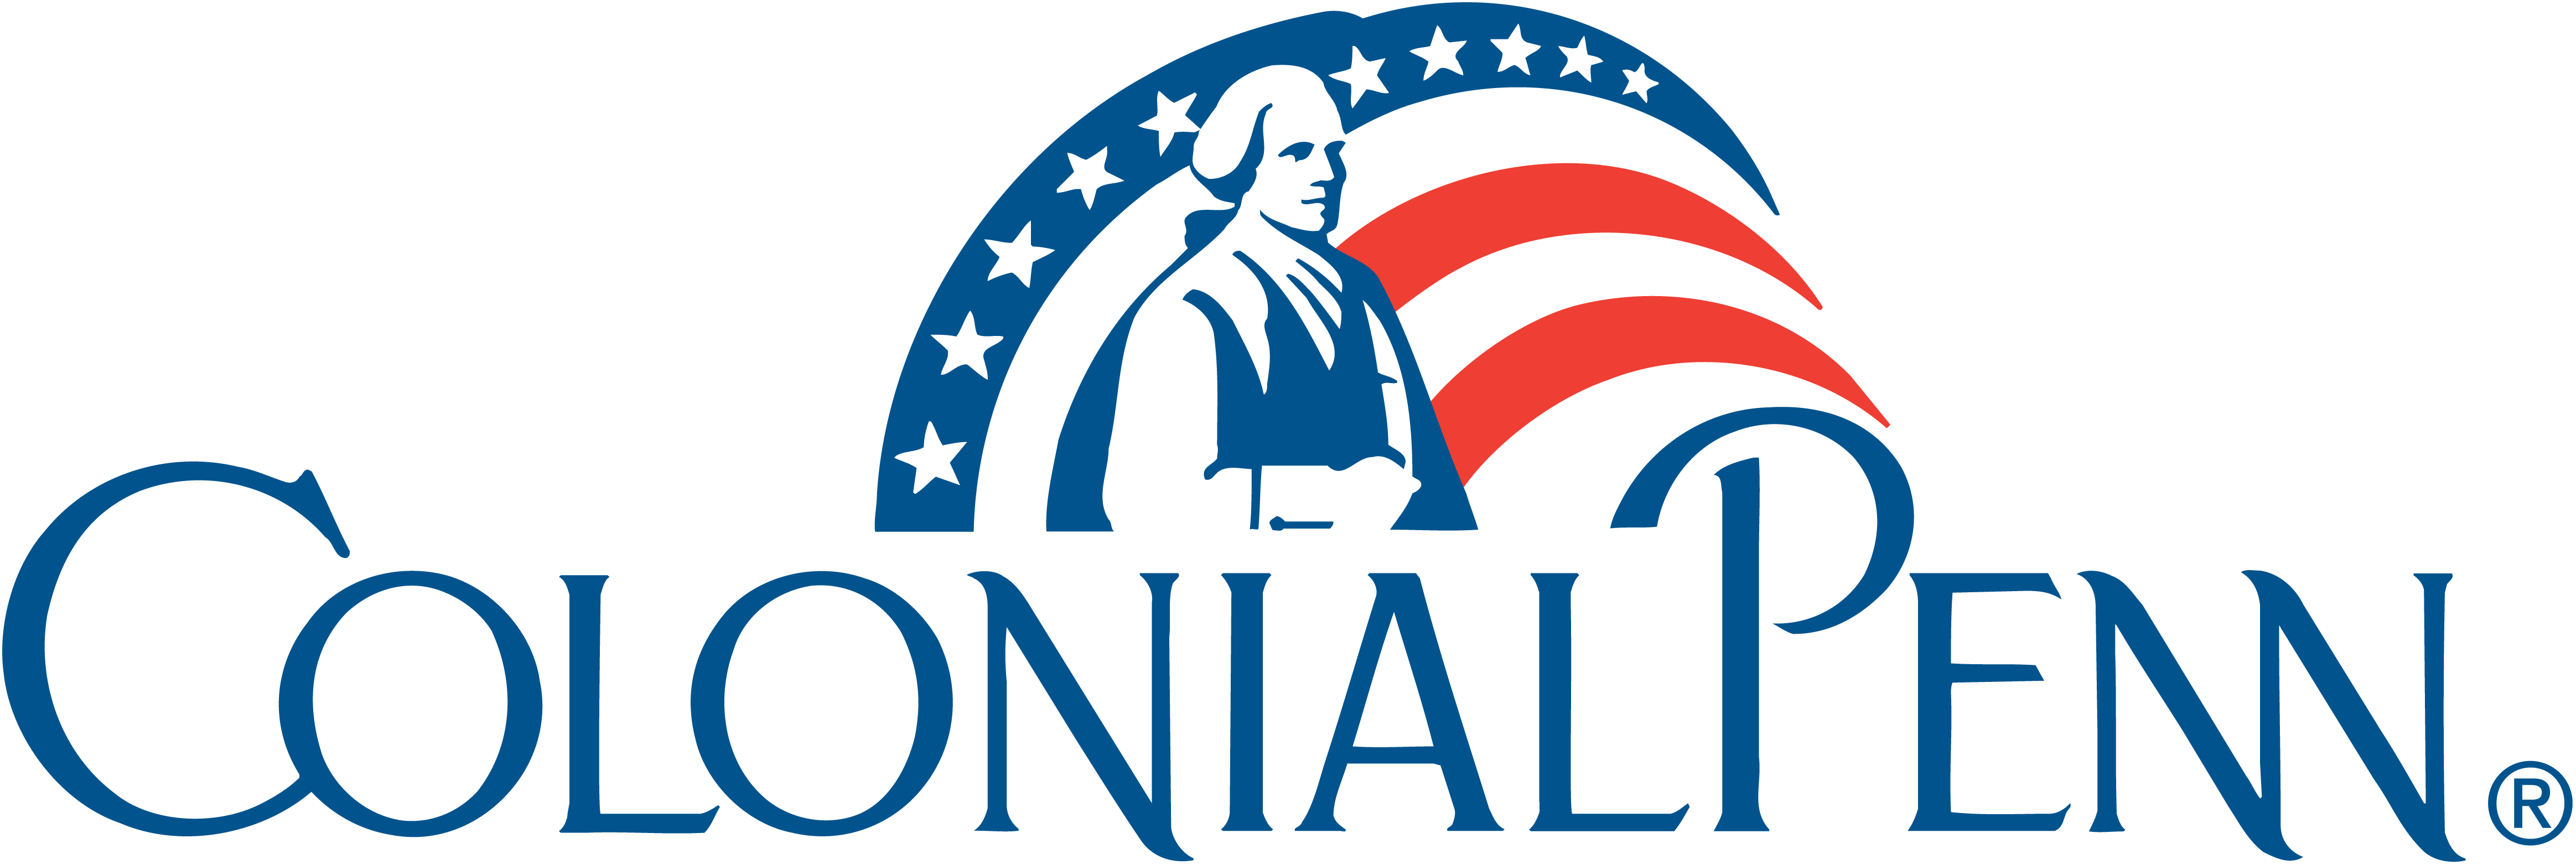 Colonial Penn Final Expense Insurance